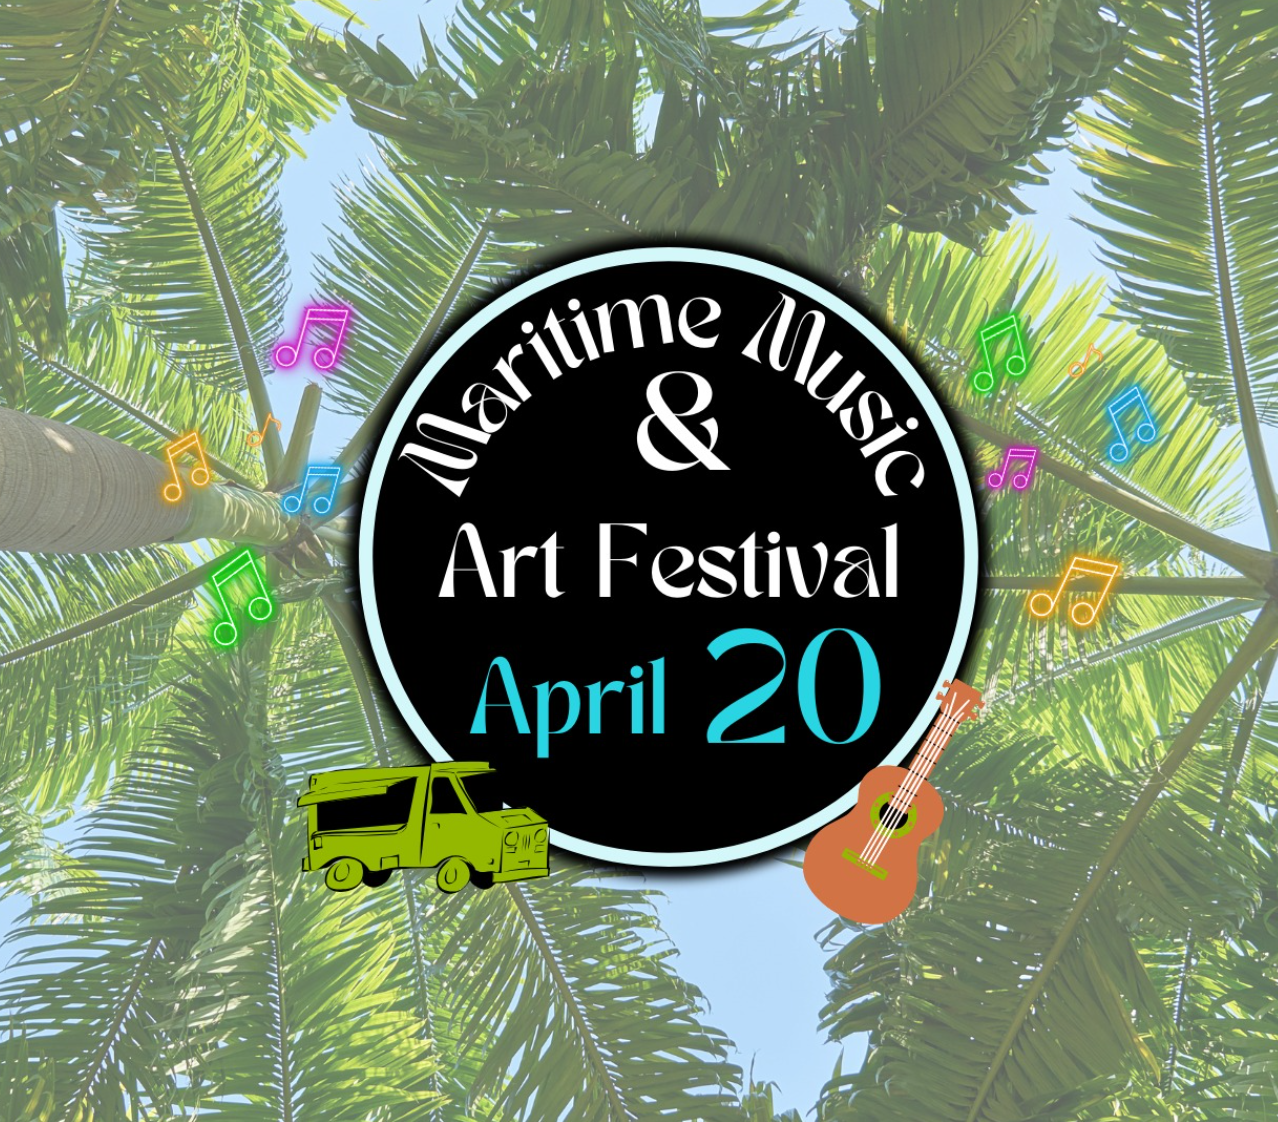 APRIL 20: Maritime Music &amp; Art Festival